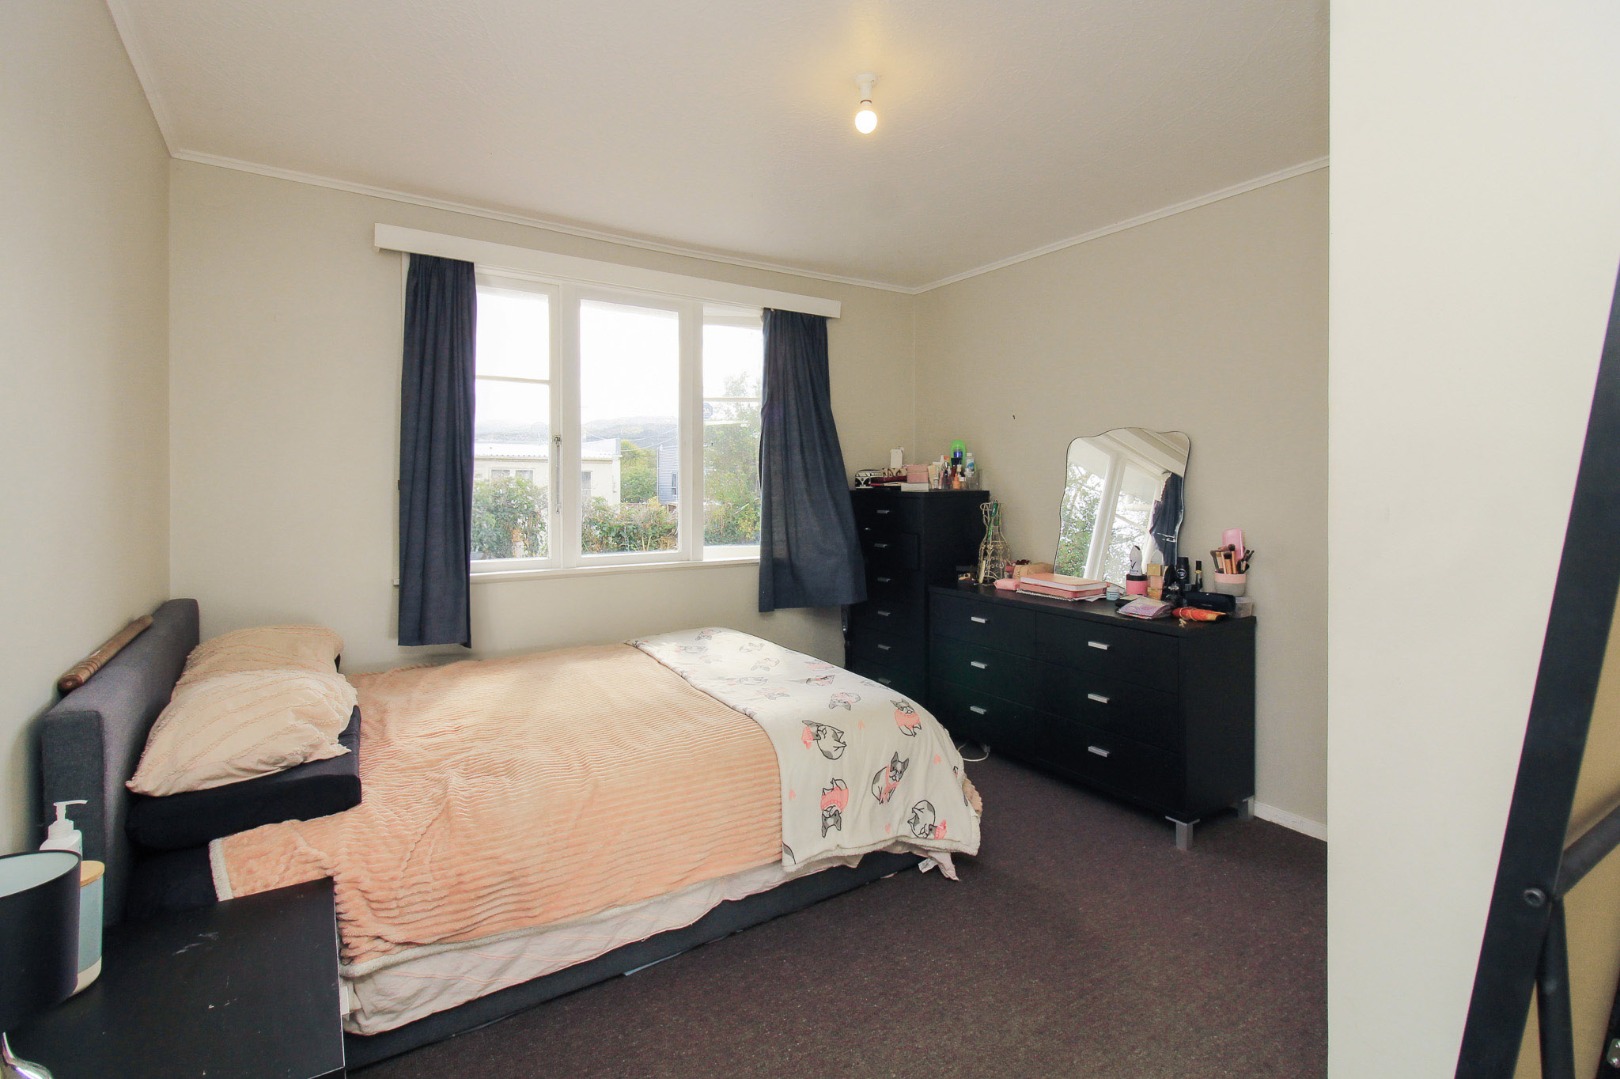 3 Bedrooms, Wallaceville, Upper Hutt, Wellington image 6